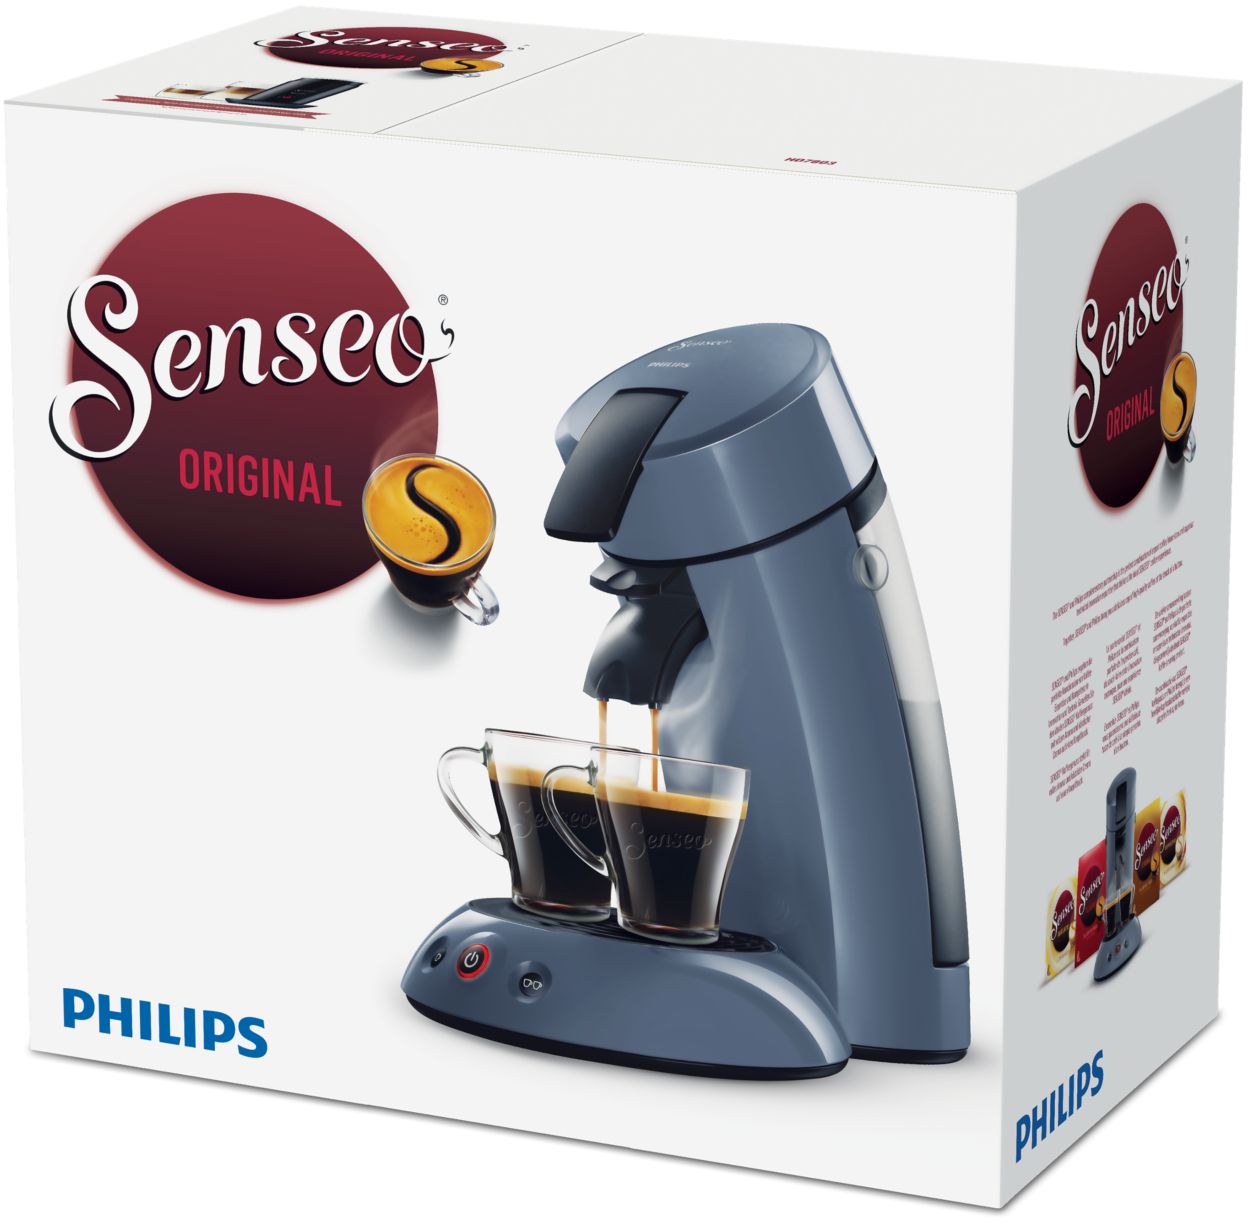 Philips Senseo Original HD7813 specifications